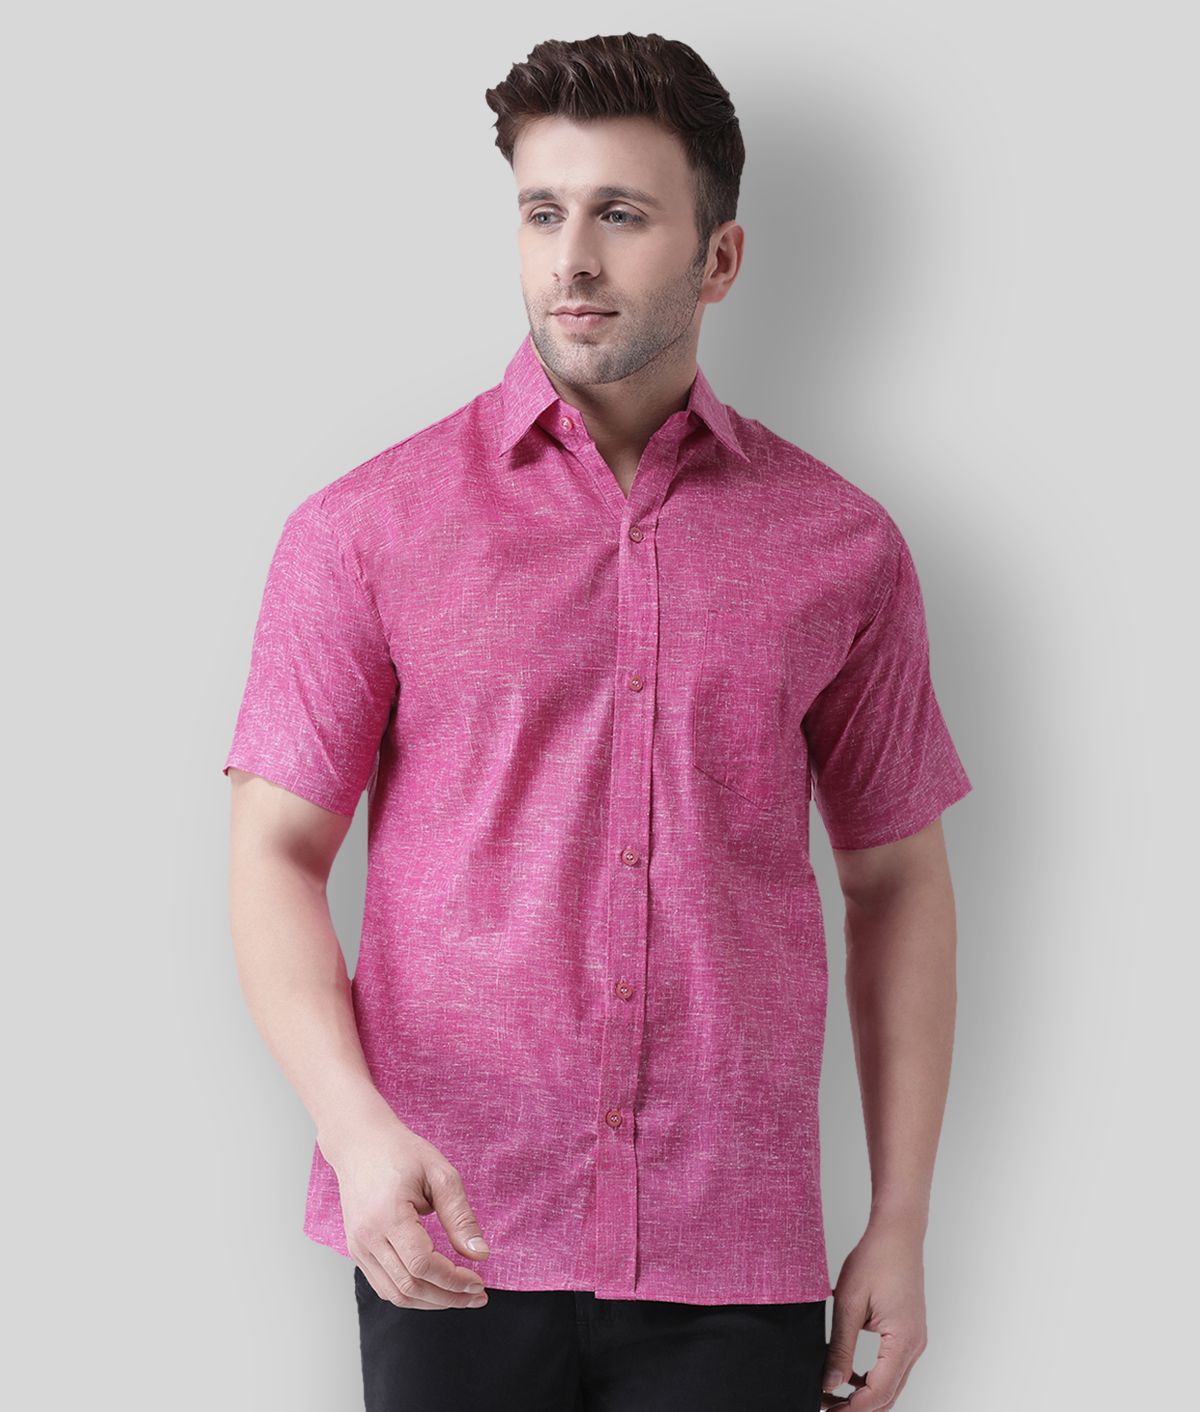 RIAG - Pink Cotton Regular Fit Men's Casual Shirt (Pack of 1 )